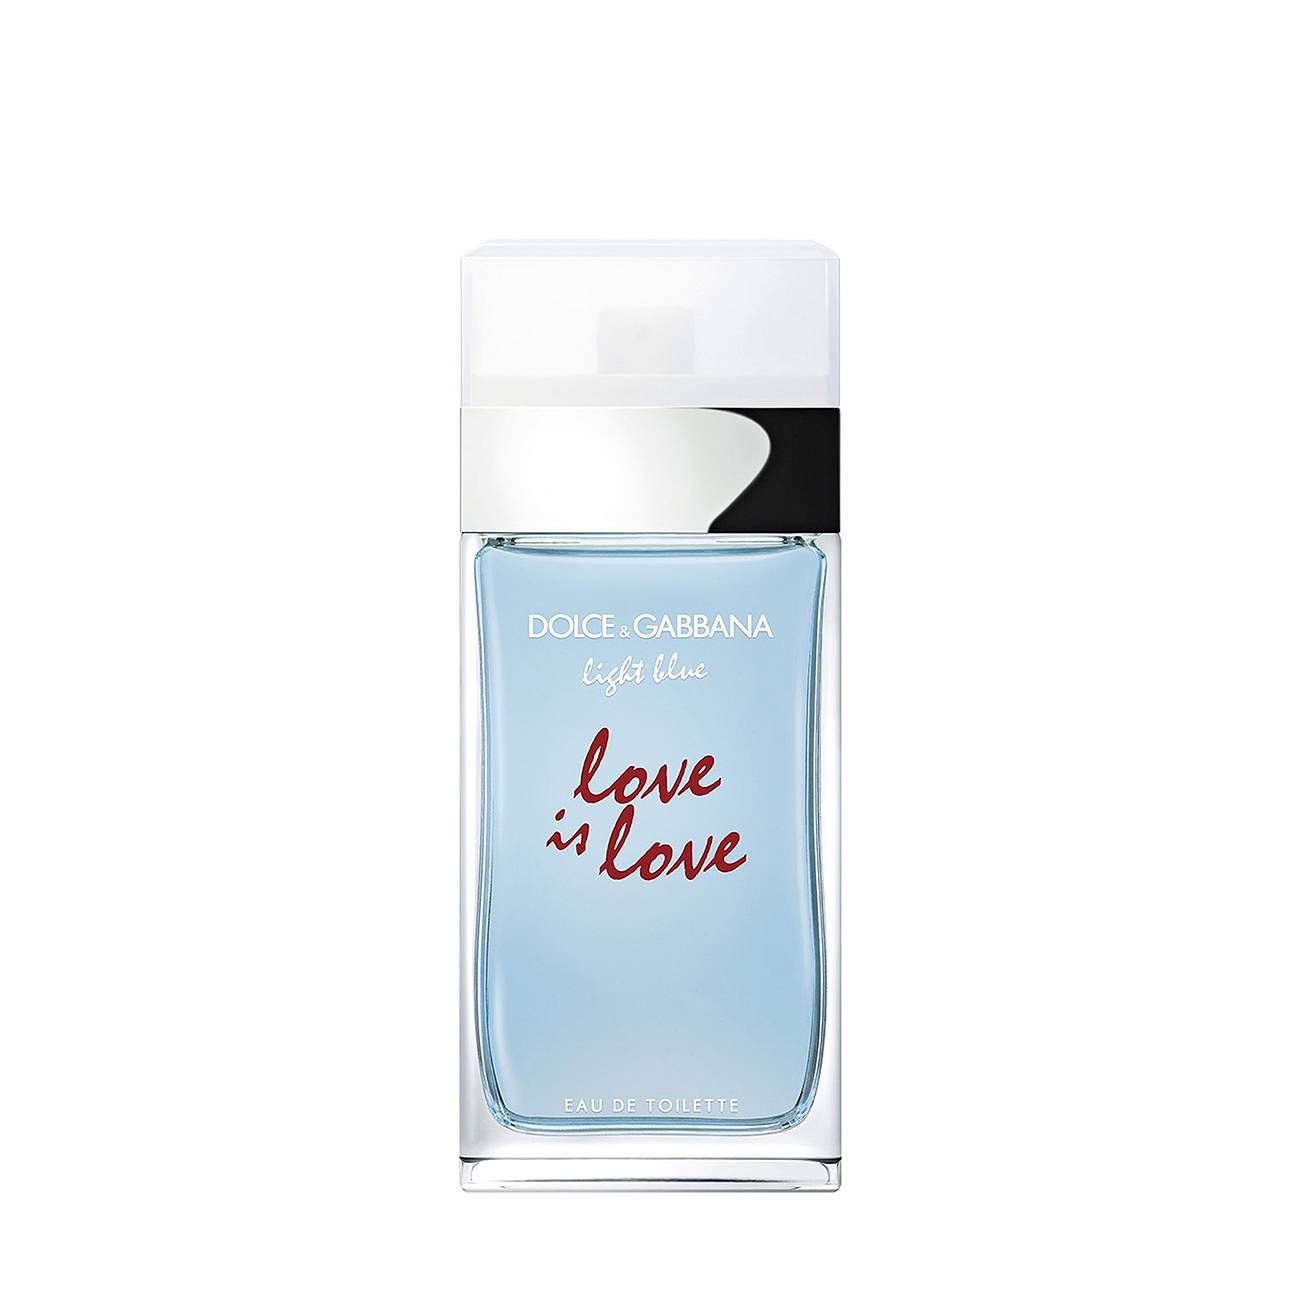 Apa de Toaleta Dolce & Gabbana LIGHT BLUE LOVE IS LOVE 100ml cu comanda online